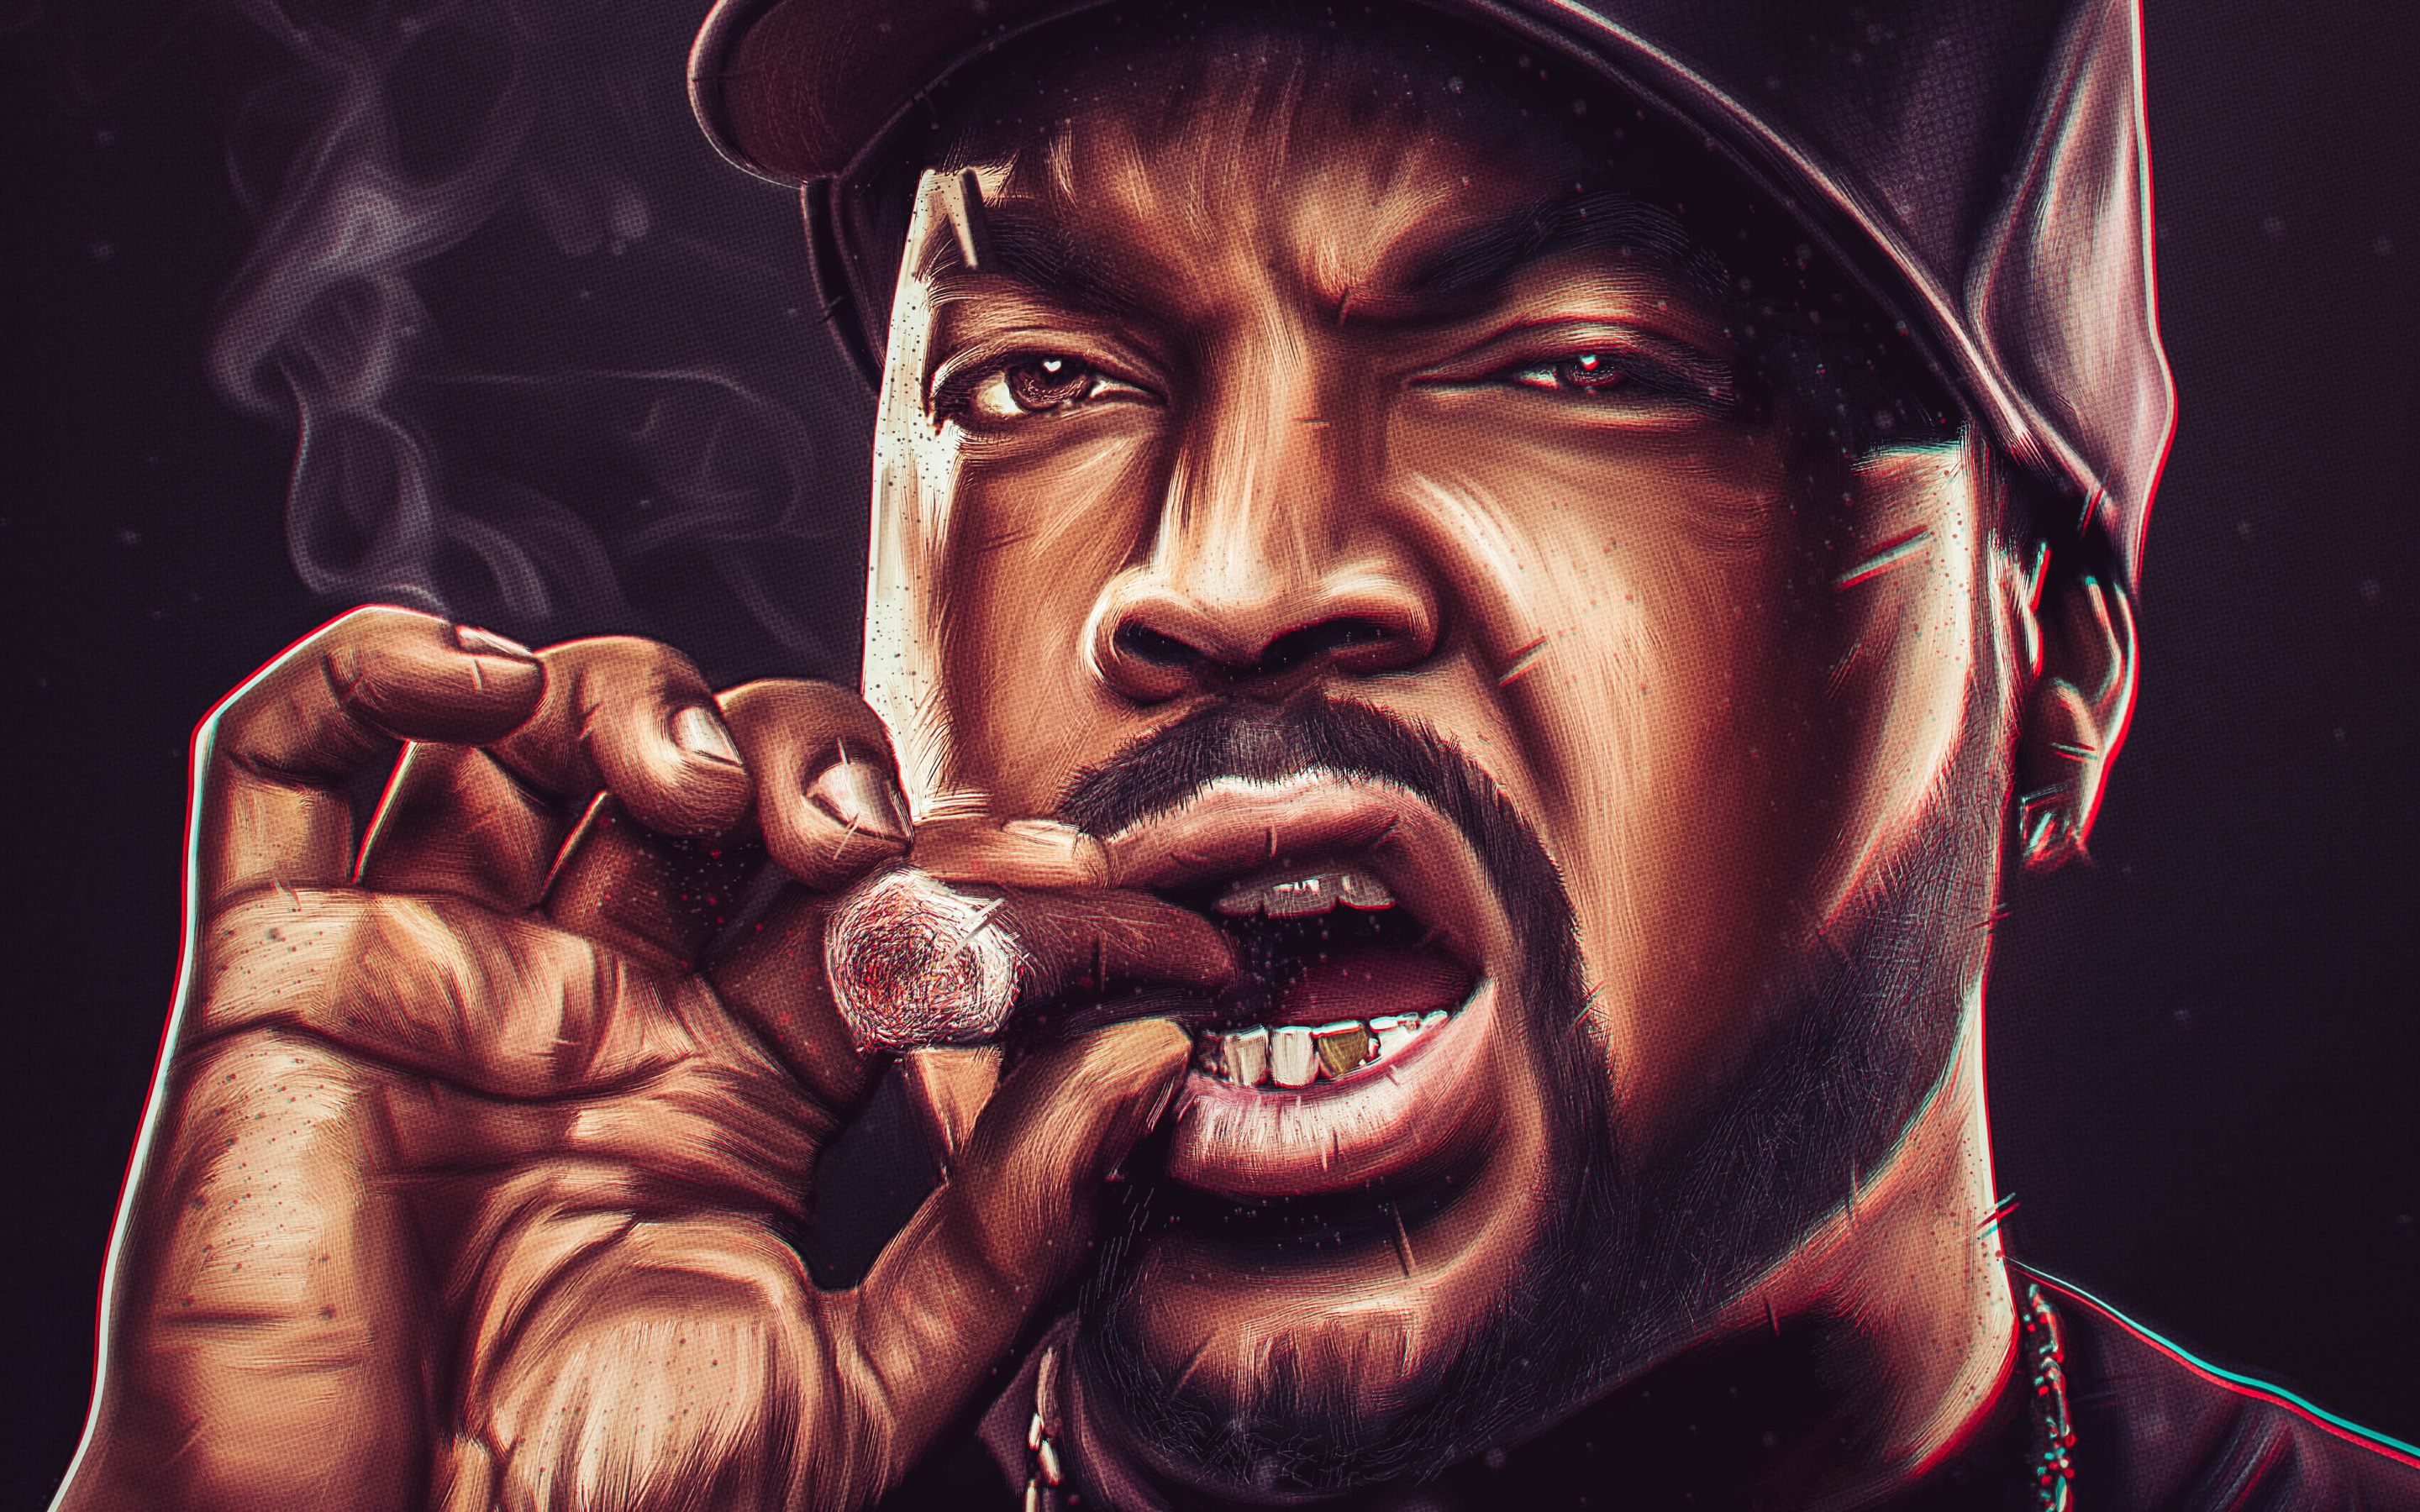 3 д негры. Ice Cube гангста-РЭПЕРЫ. Ice Cube с сигарой. Айс Кьюб арт. Обои айс Кьюб.